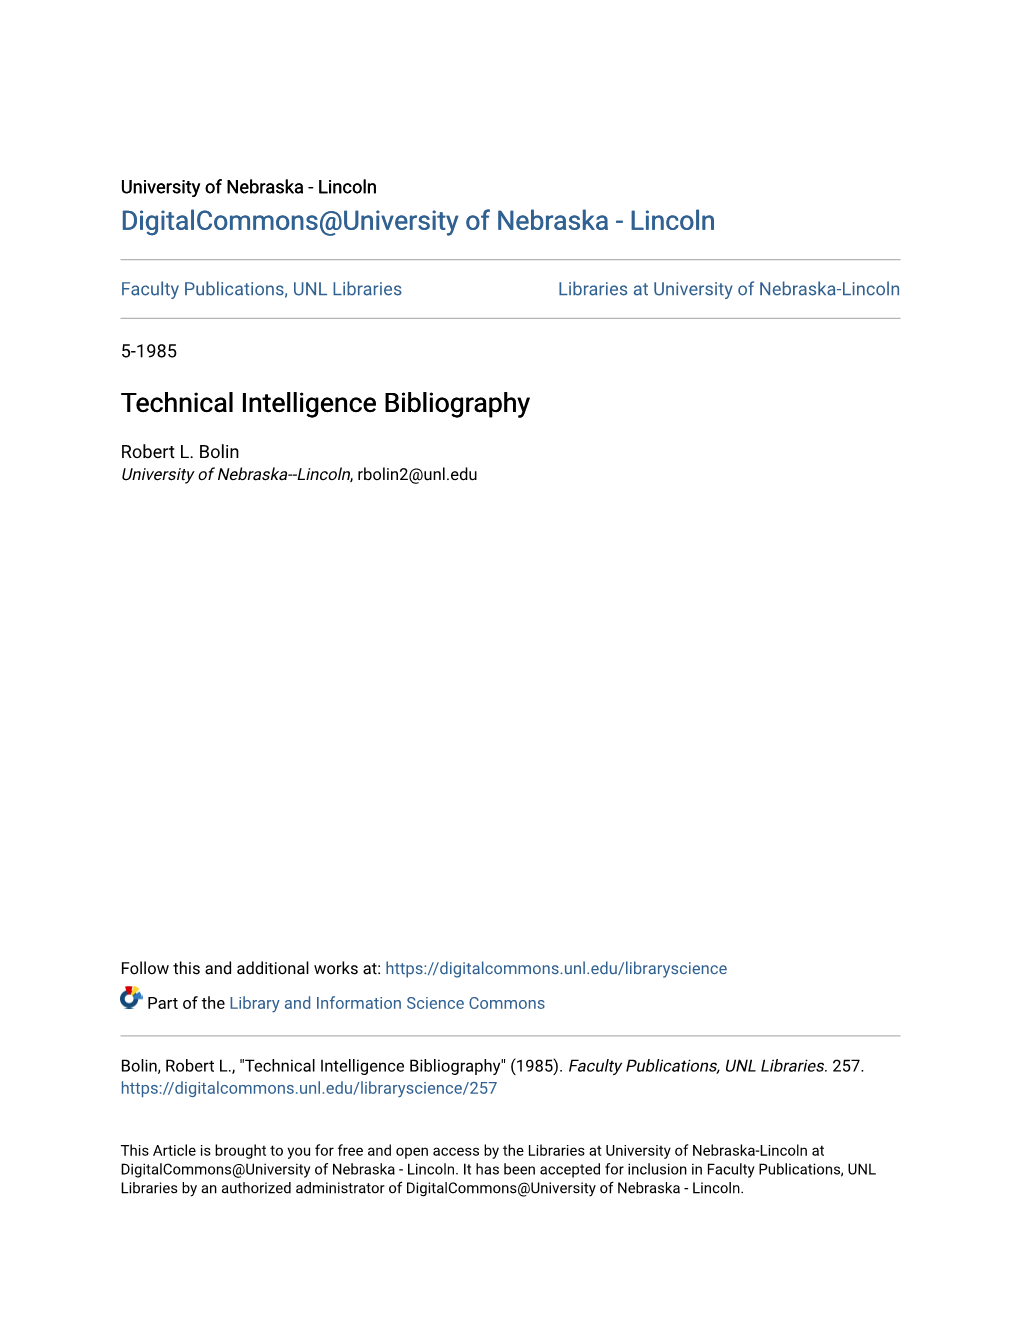 Technical Intelligence Bibliography